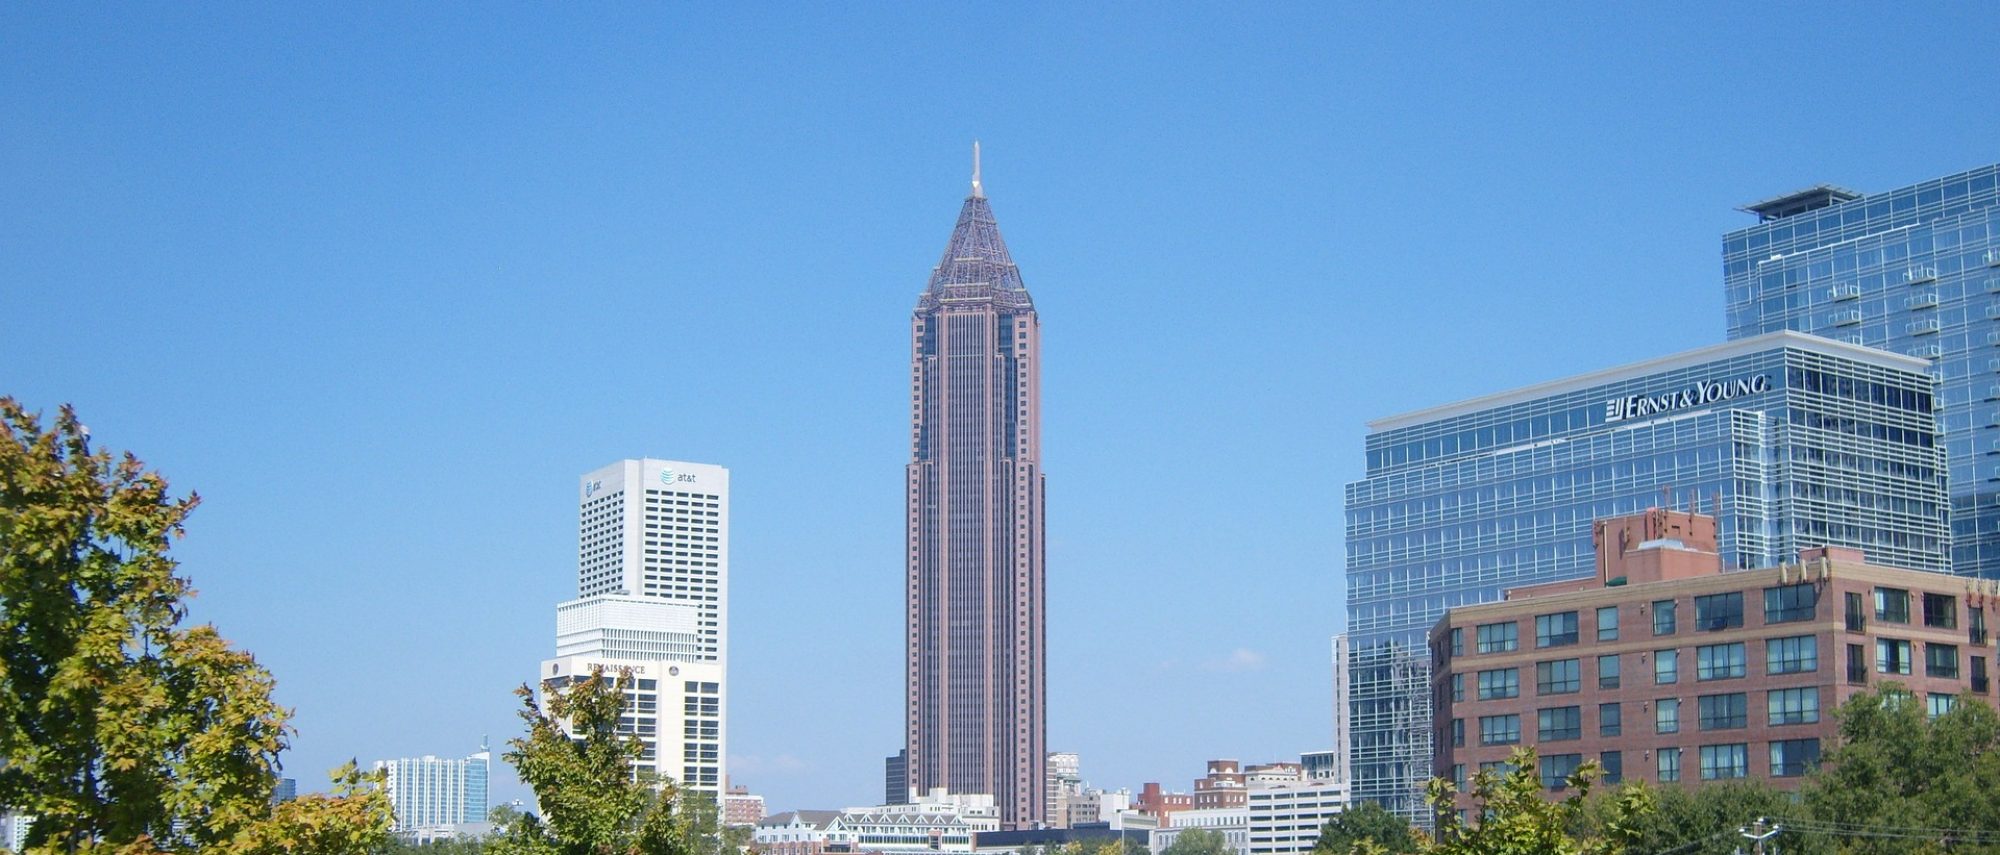 Local Atlanta GA Appliance Repair Services & Technology Updates - Atlanta Georgia